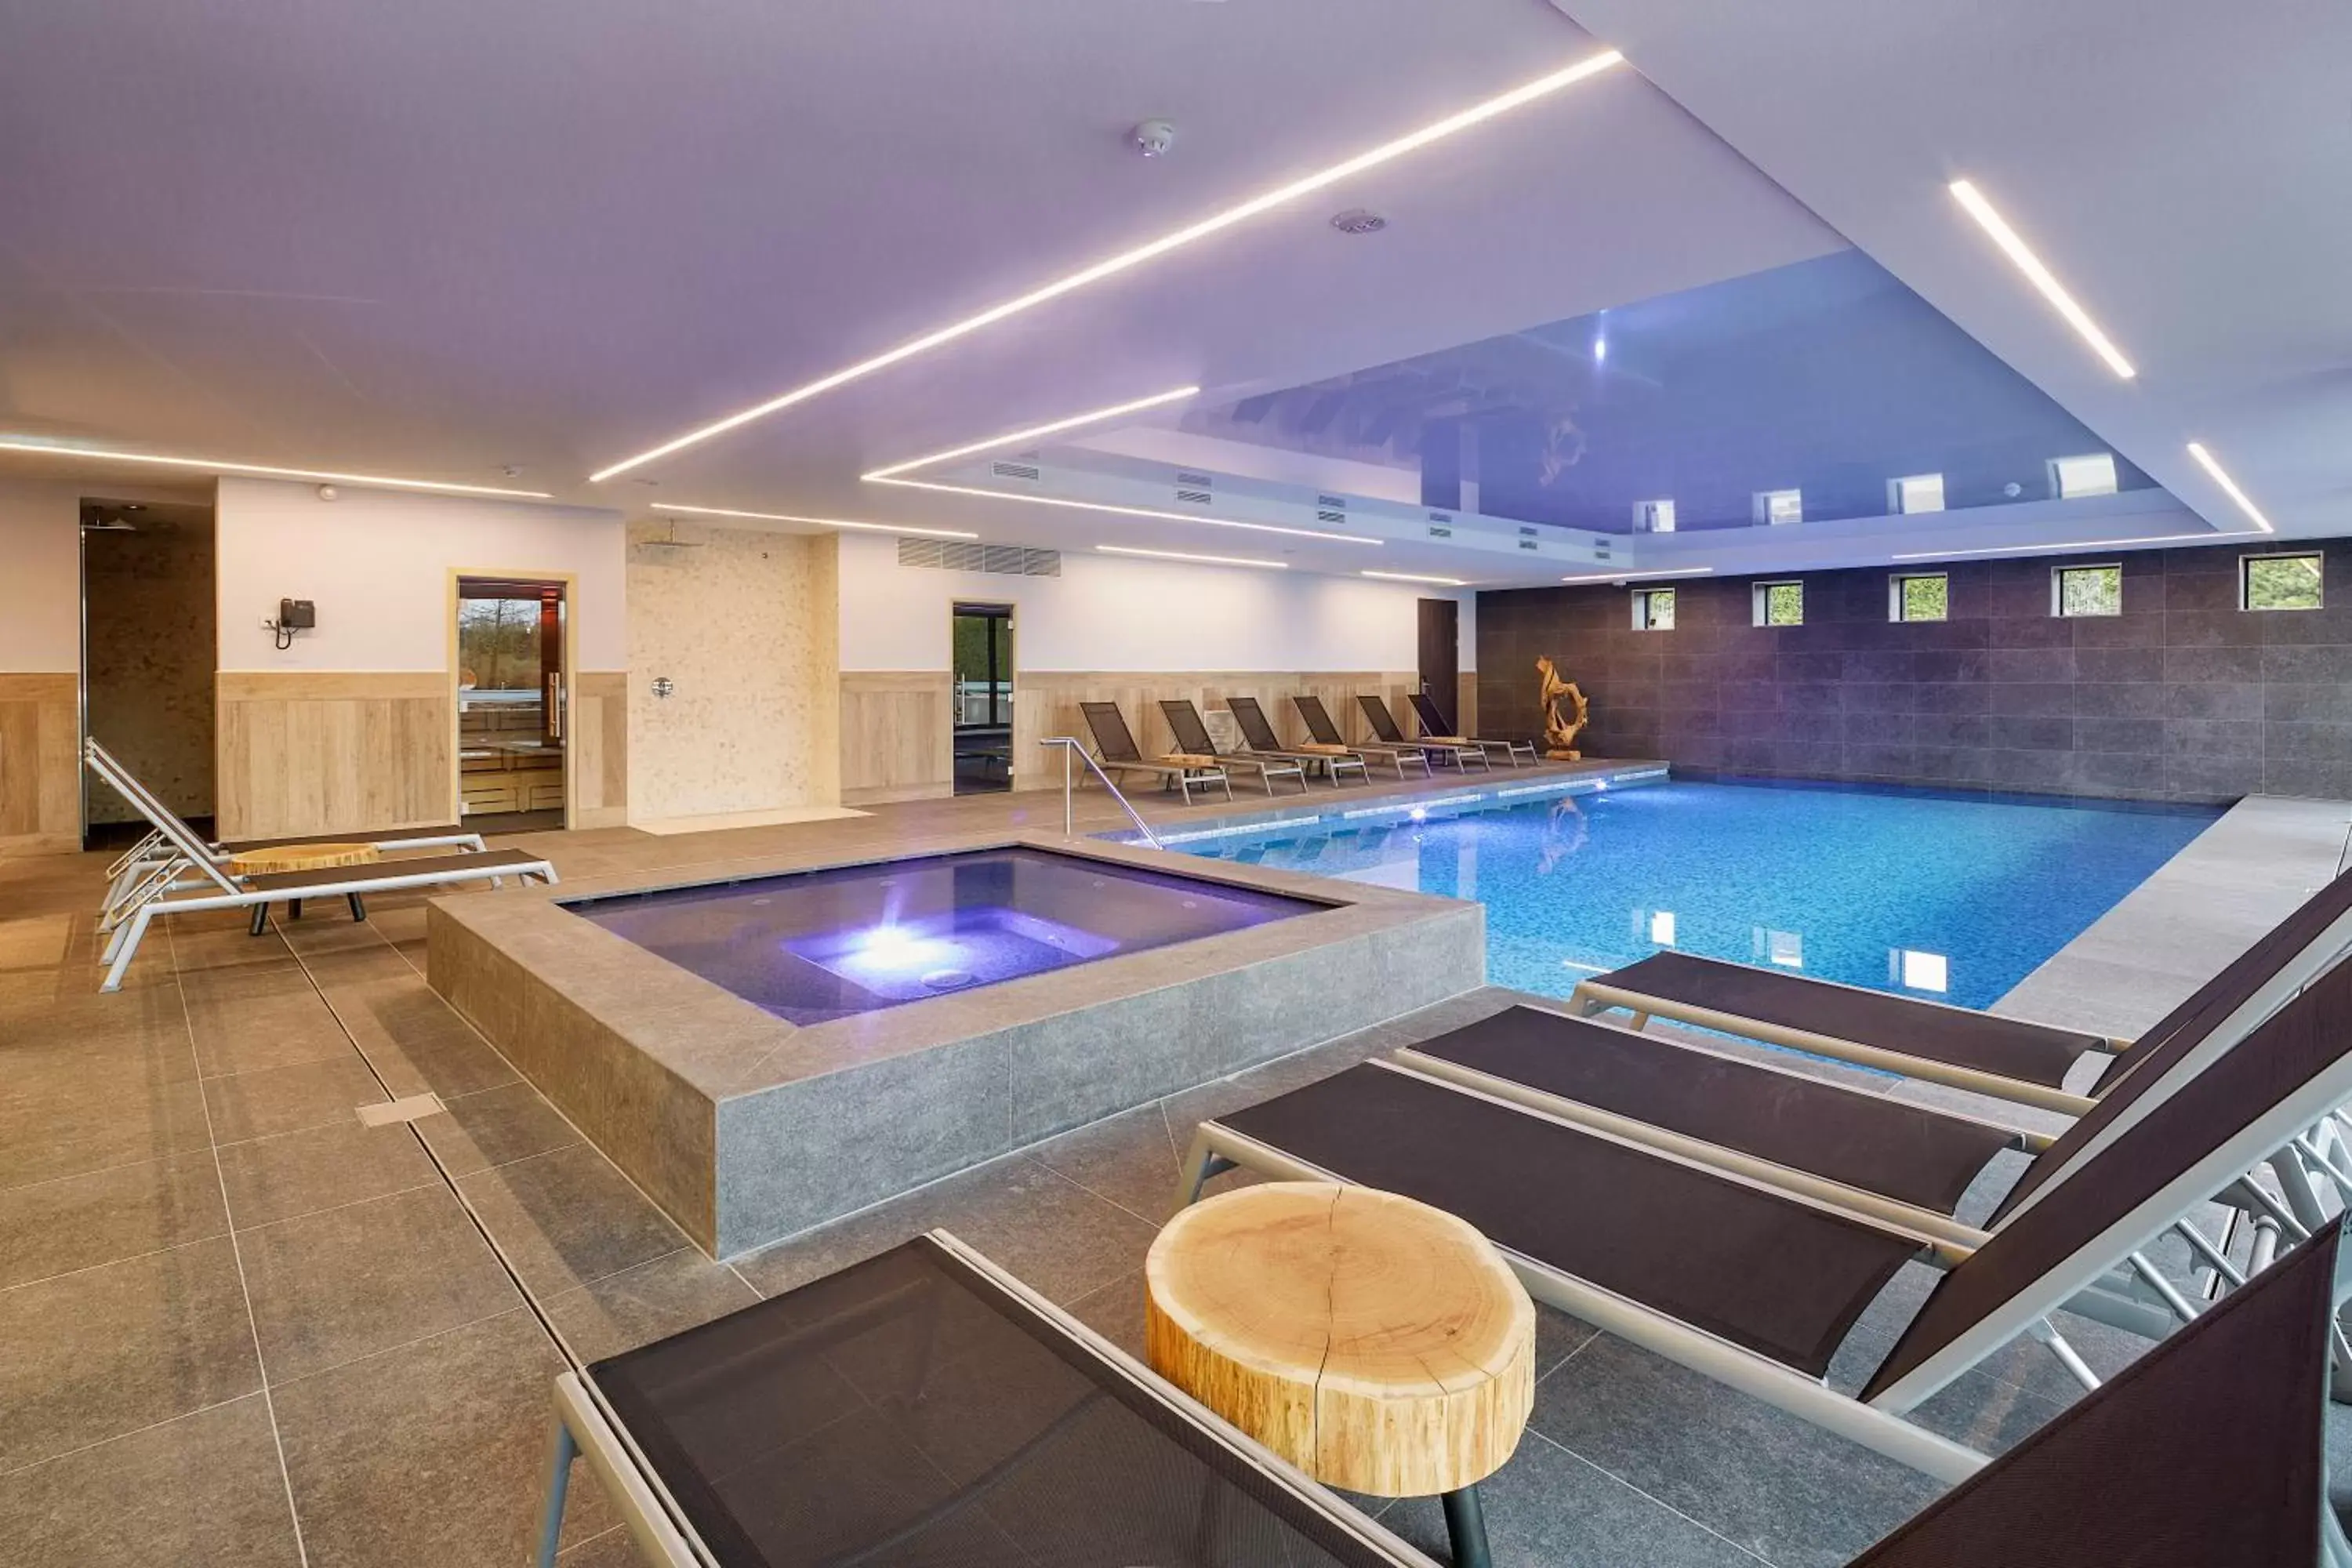 Swimming pool in Van der Valk Hotel Breda